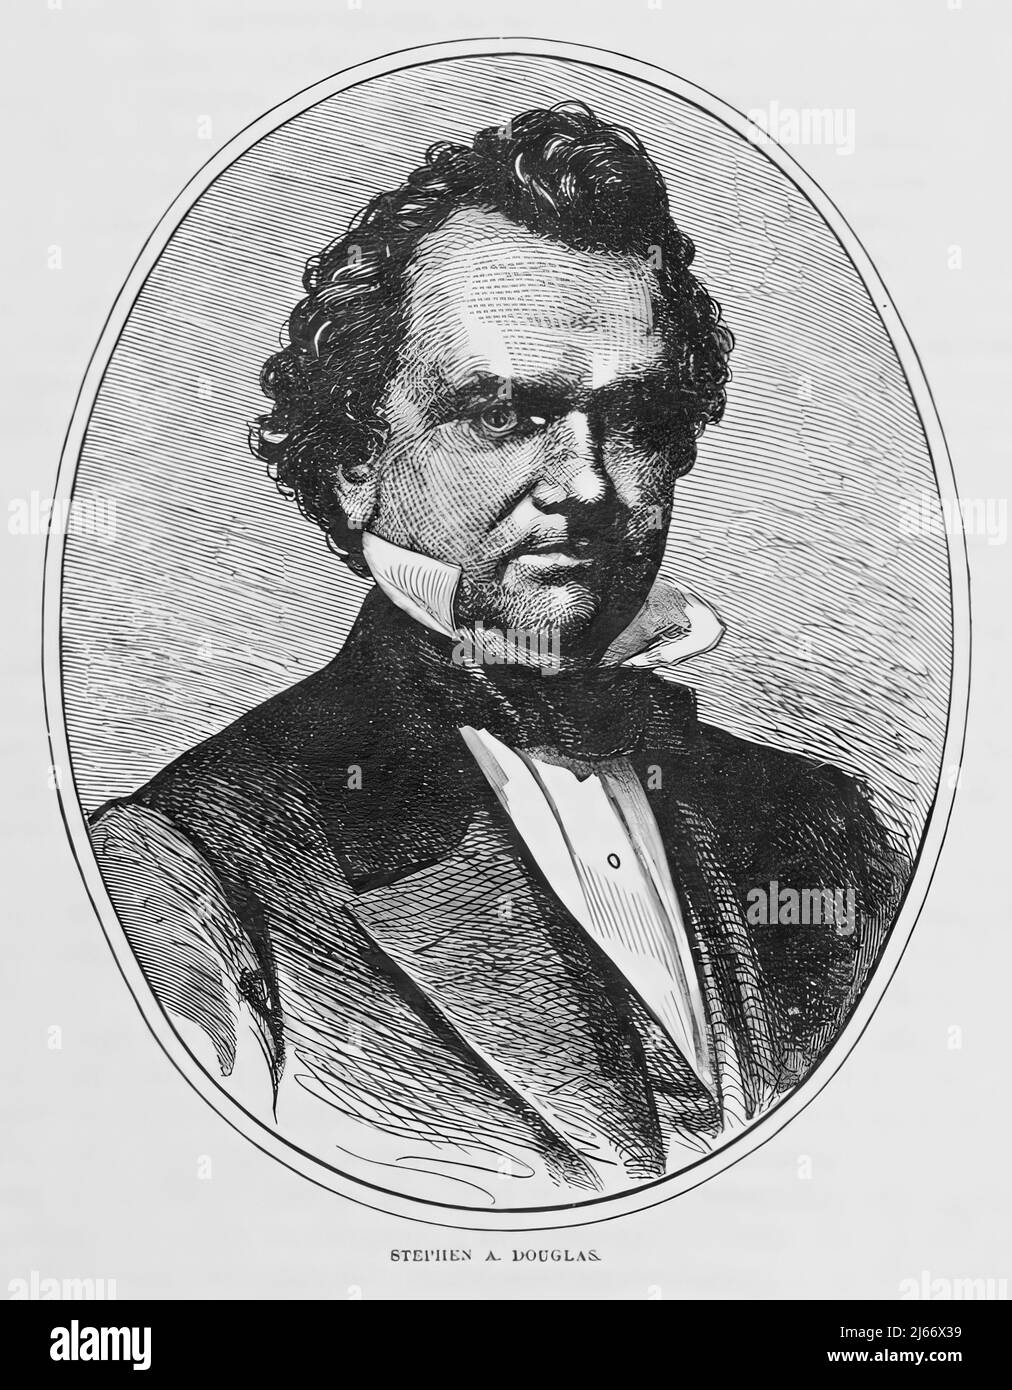 Portrait of Stephen Arnold Douglas, 1860 presidential election Democrat nominee. 19th century illustration Stock Photo